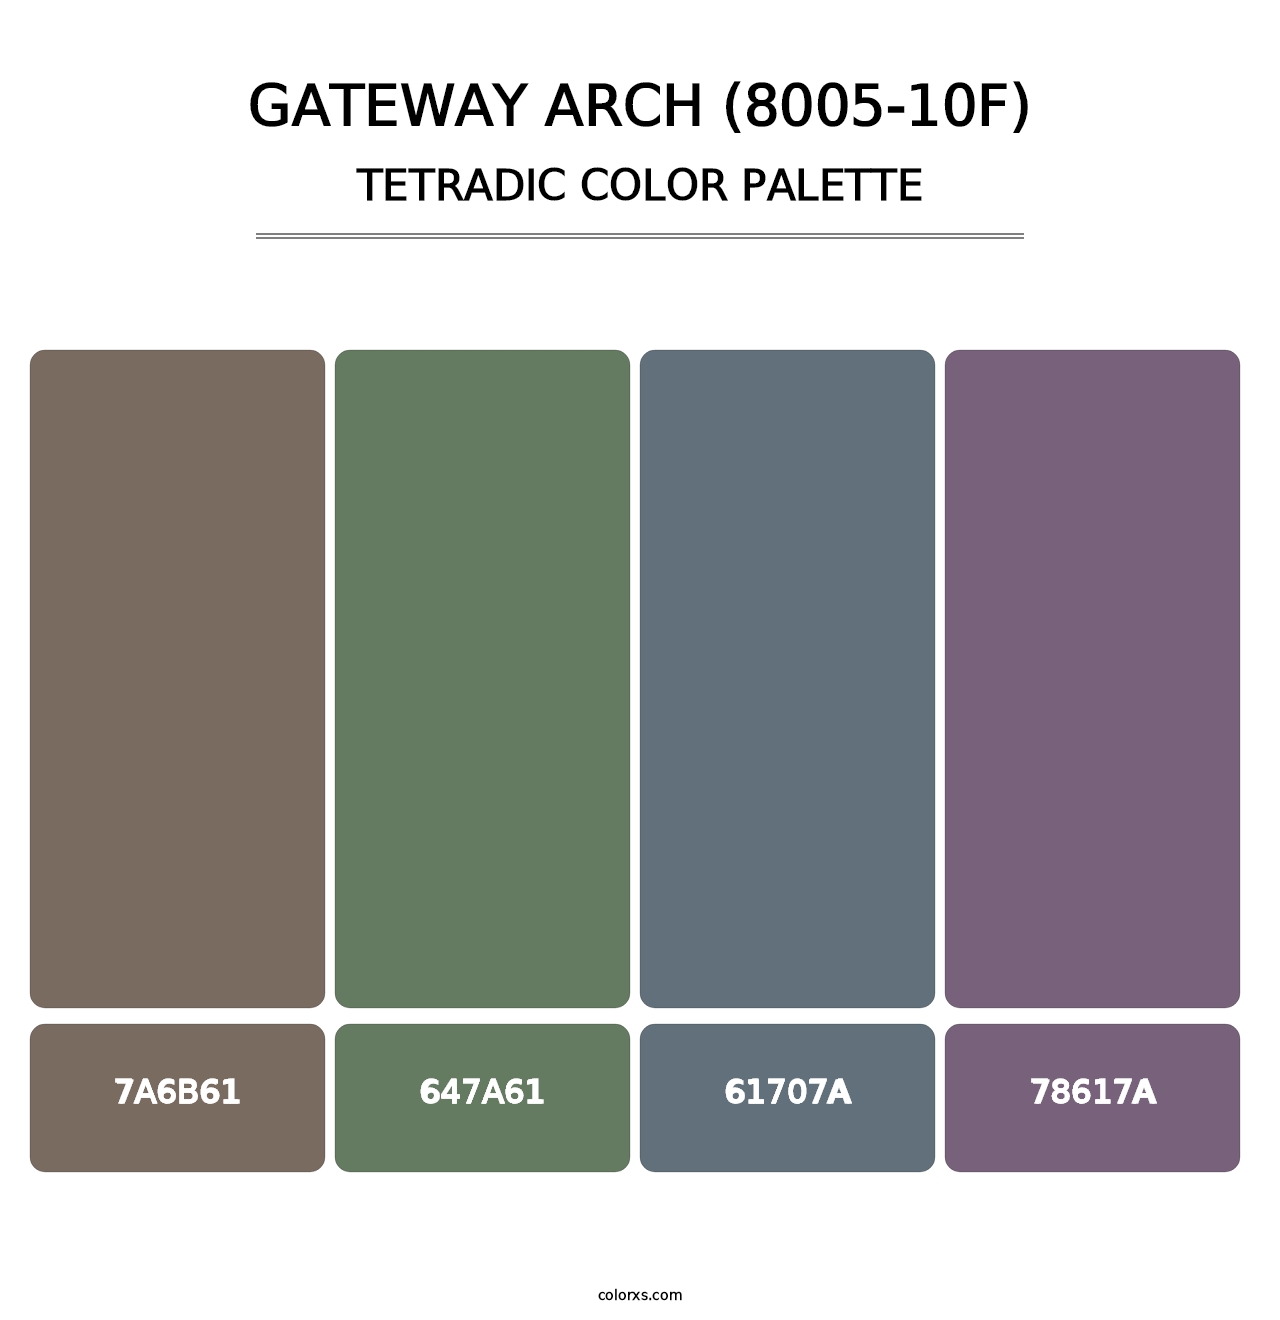 Gateway Arch (8005-10F) - Tetradic Color Palette